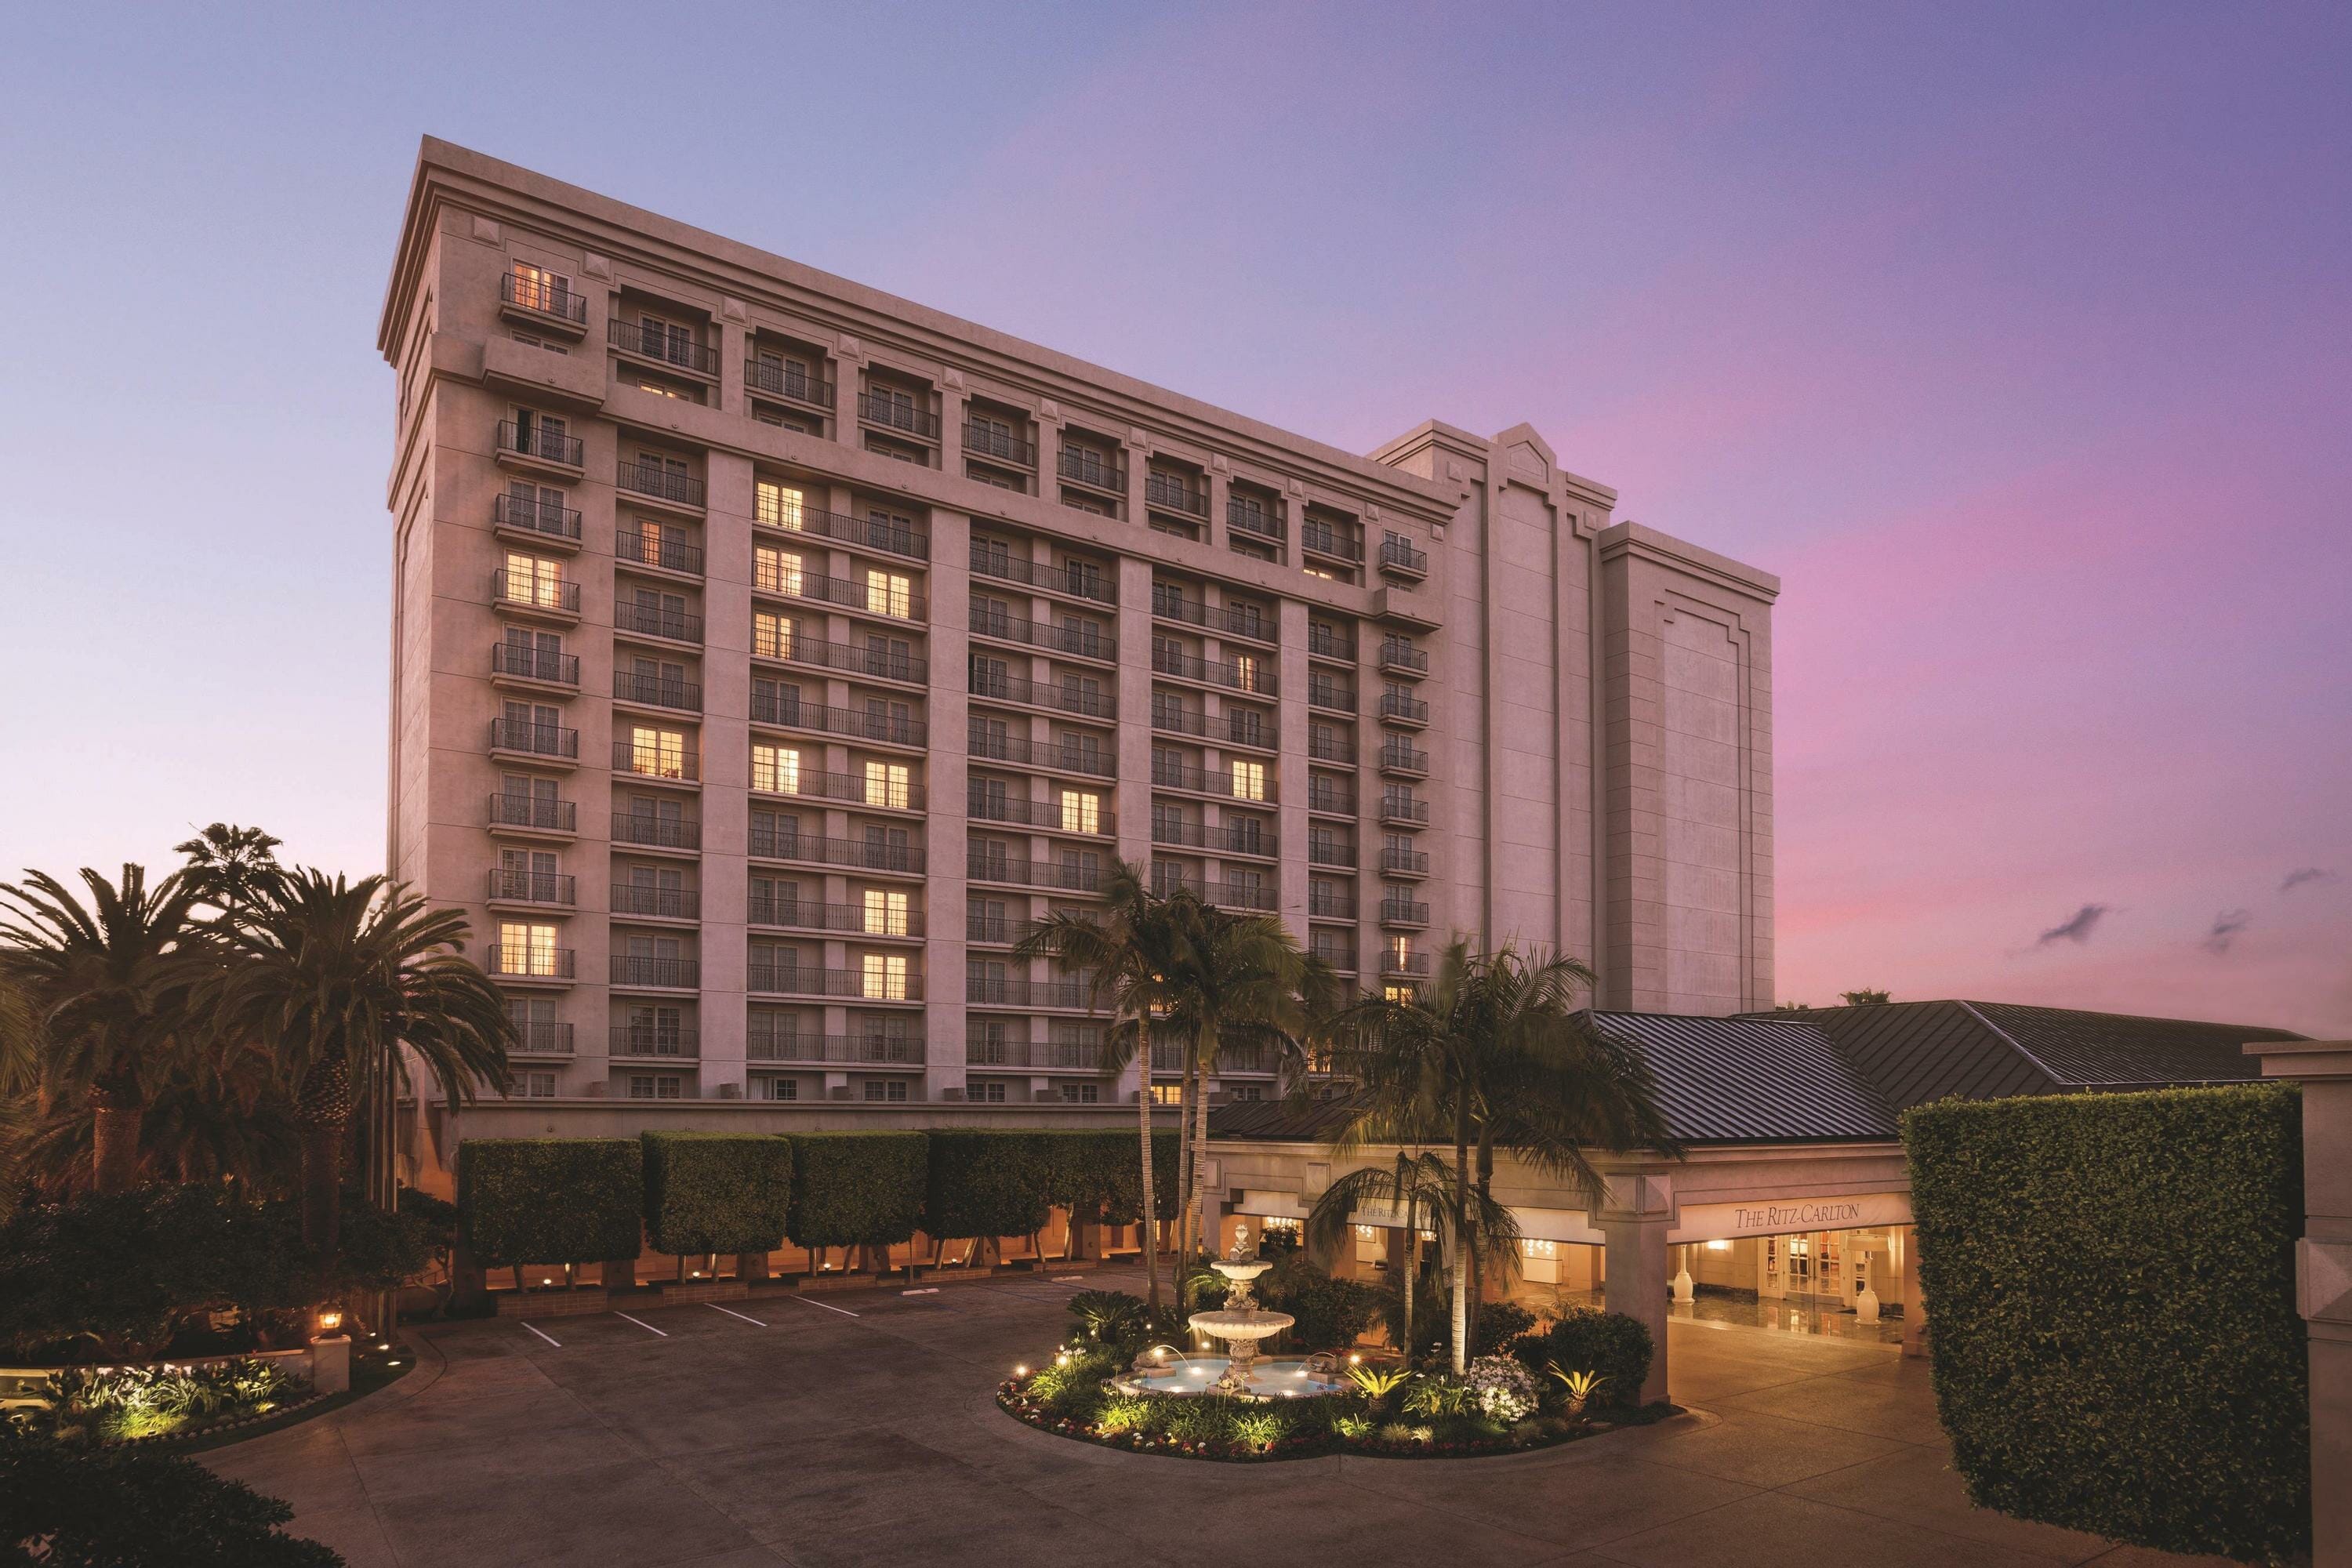 Building view of The Ritz-Carlton Marina del Rey